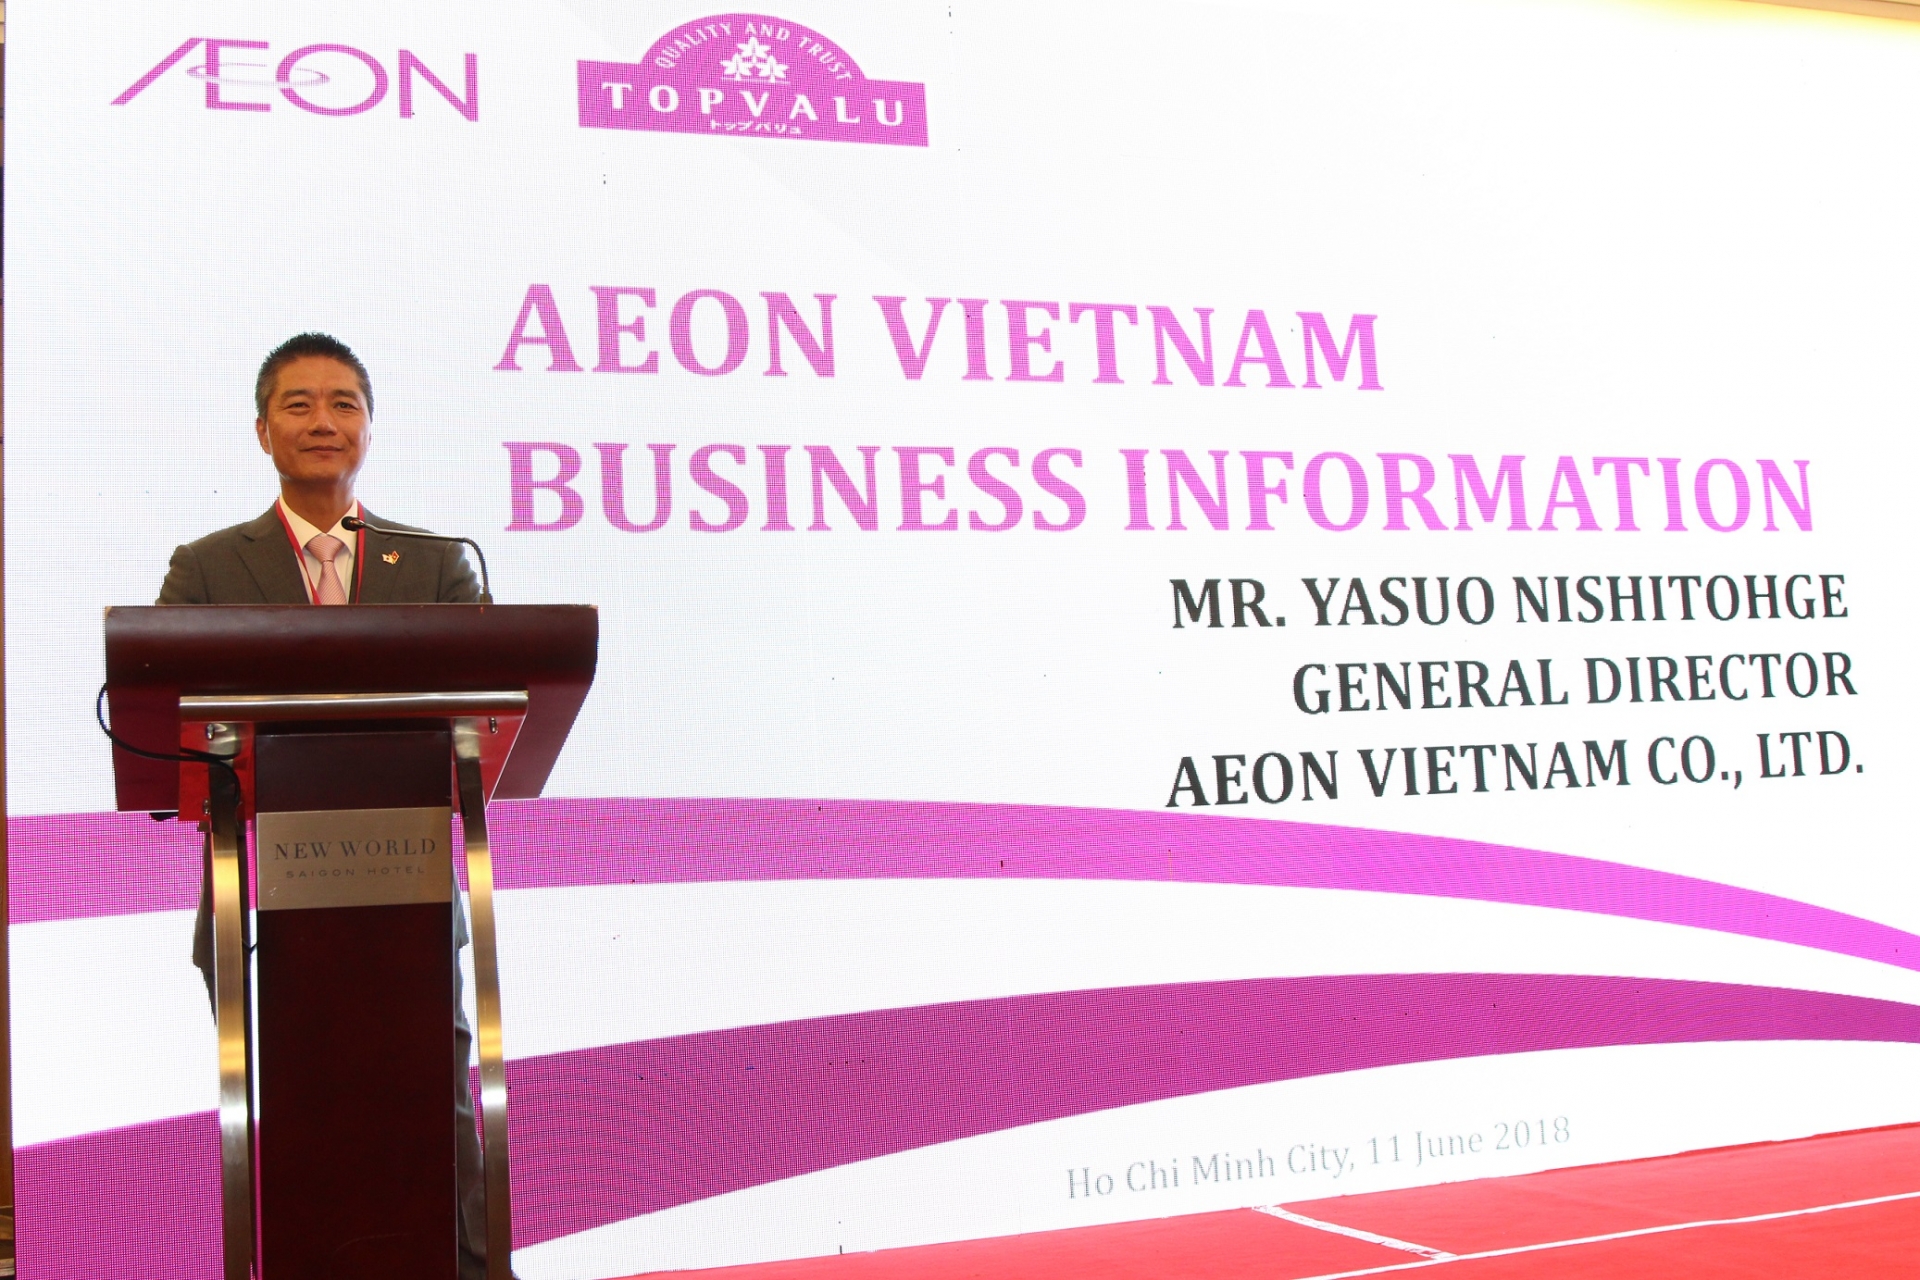 AEON Vietnam seeks suppliers and manufacturers